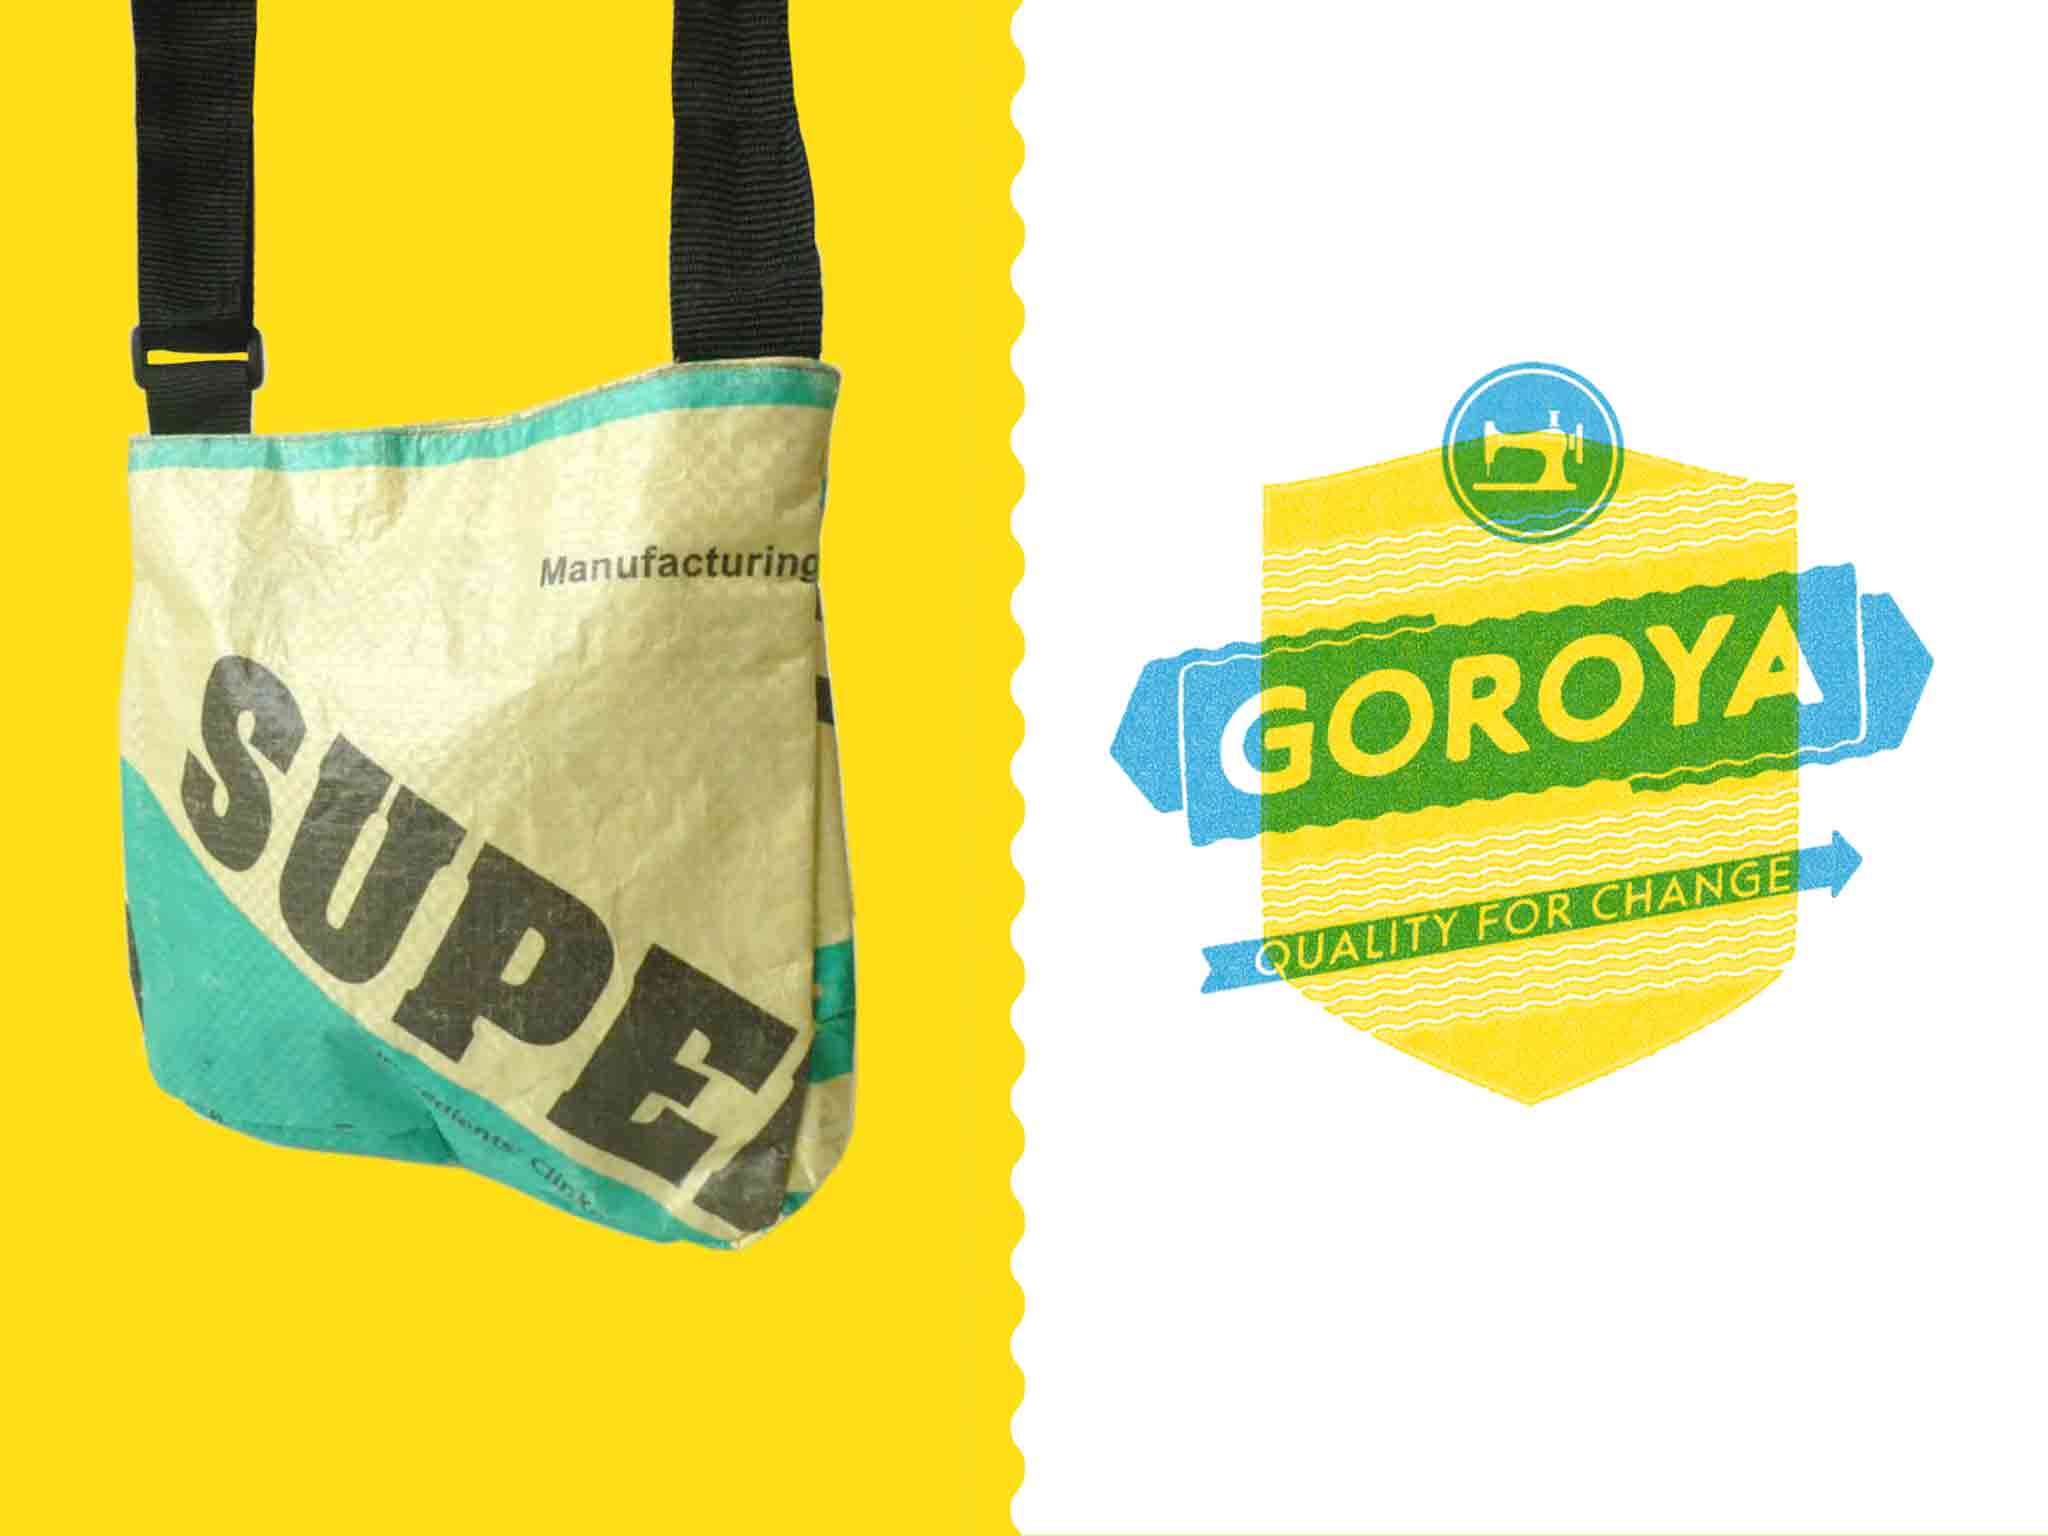 01 Goroya Logo Tasche A 02